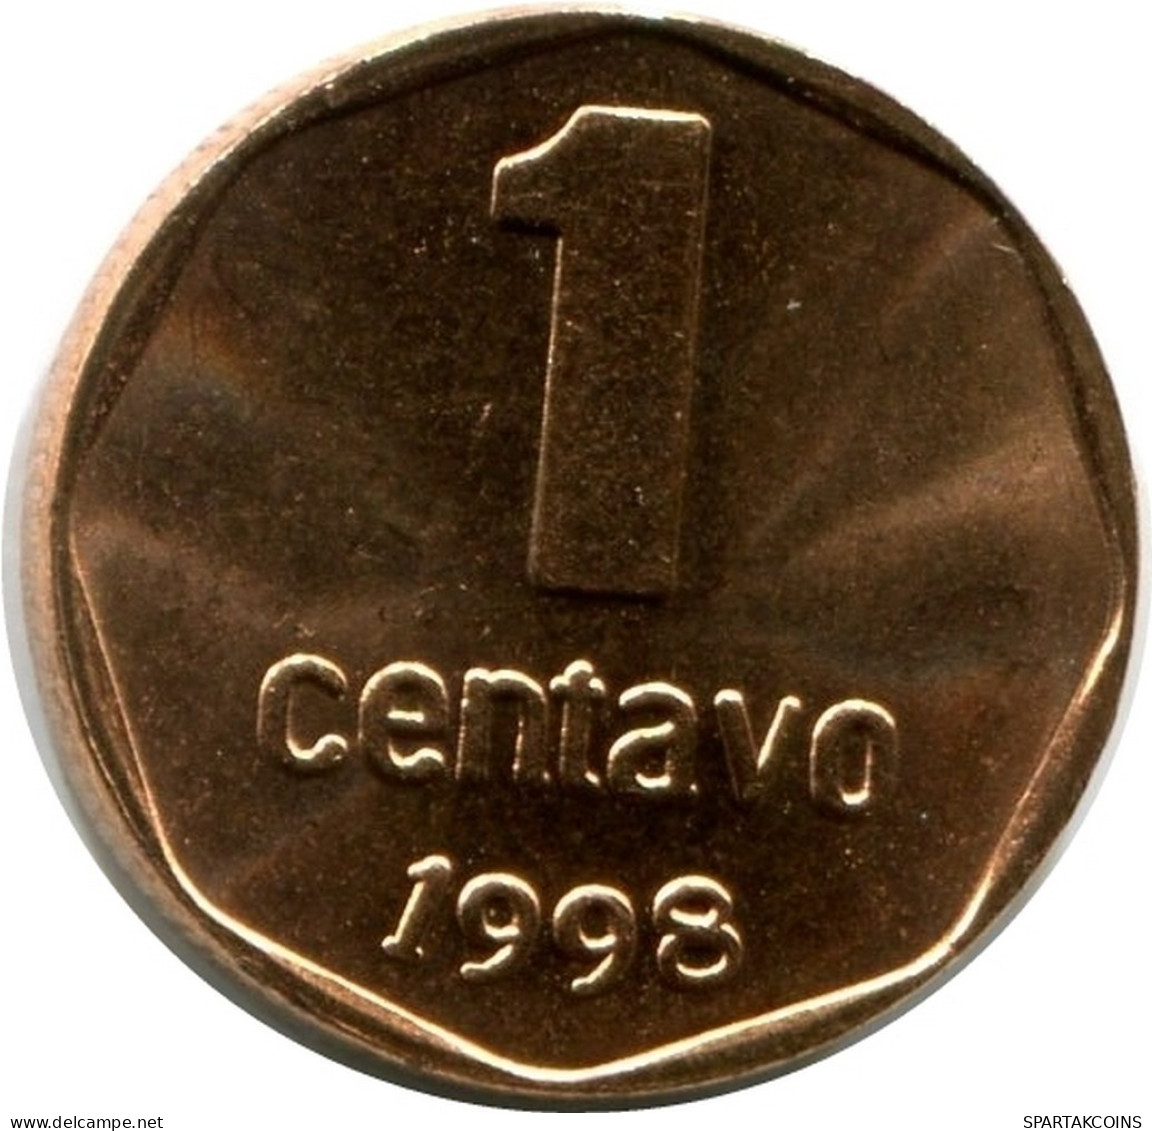 1 CENTAVO 1998 ARGENTINA Moneda UNC #M10137.E.A - Argentinië